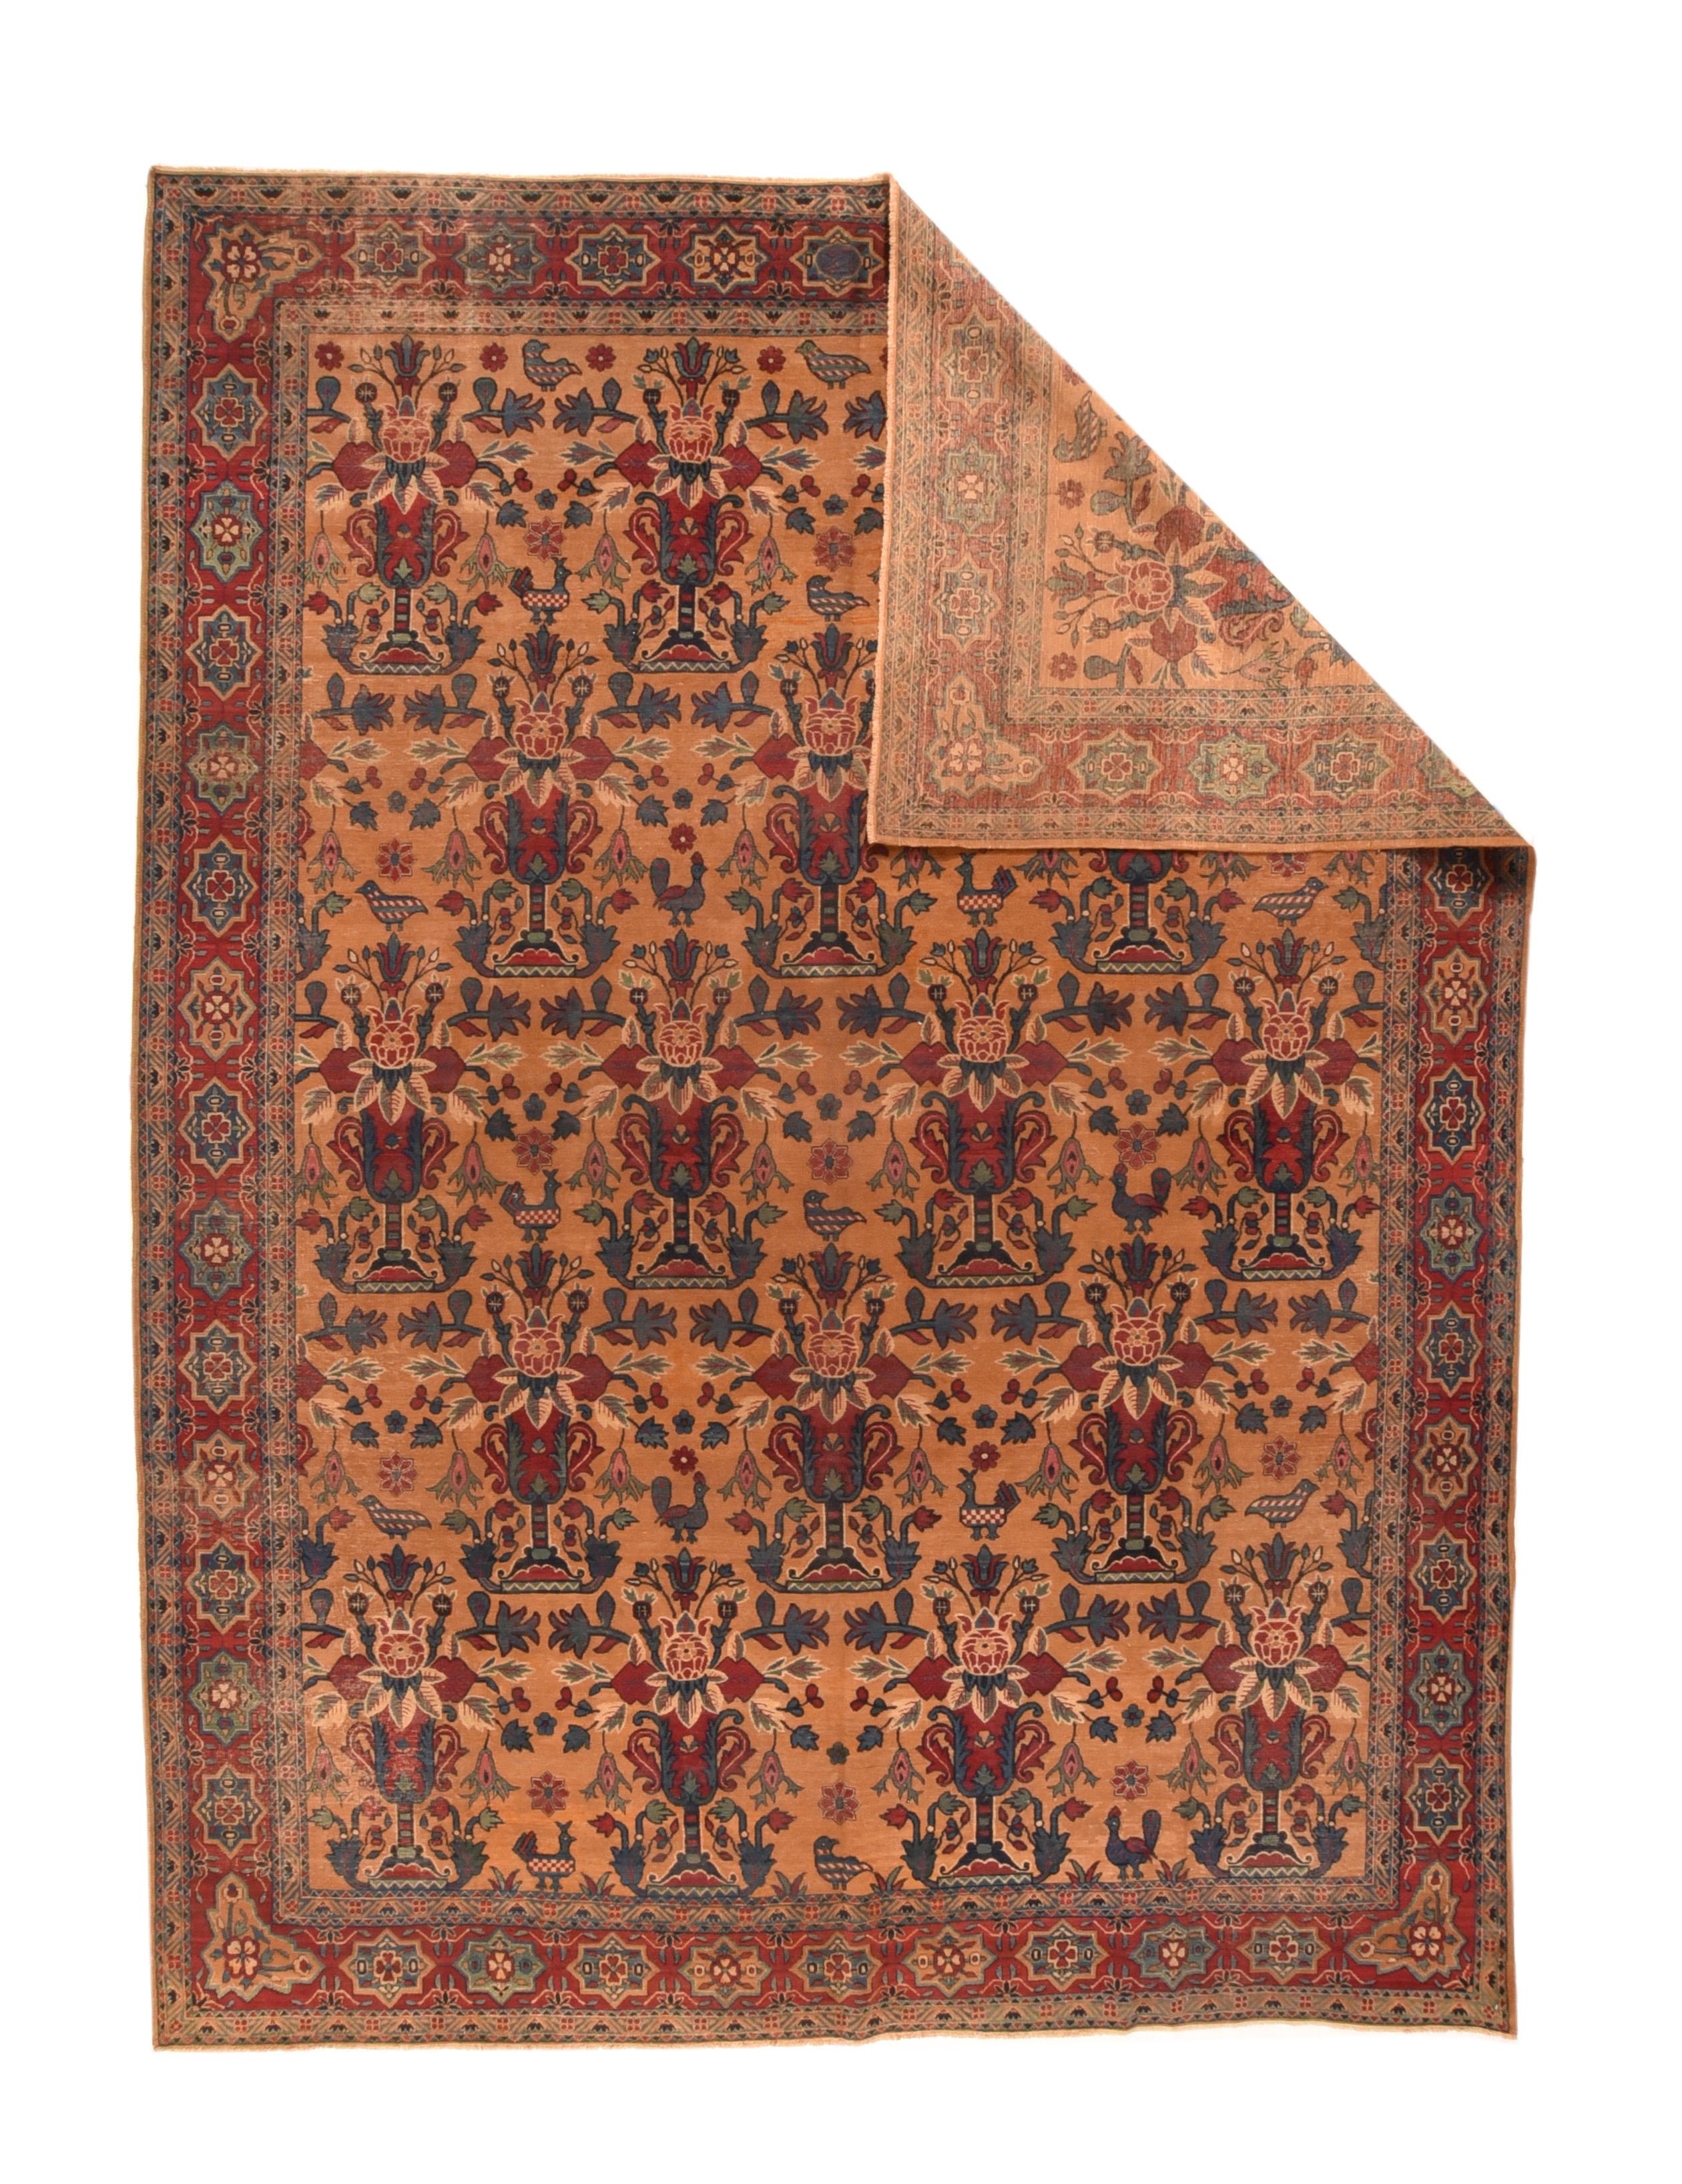 Antique Kerman rug measures 8'10'' x 11'11''.